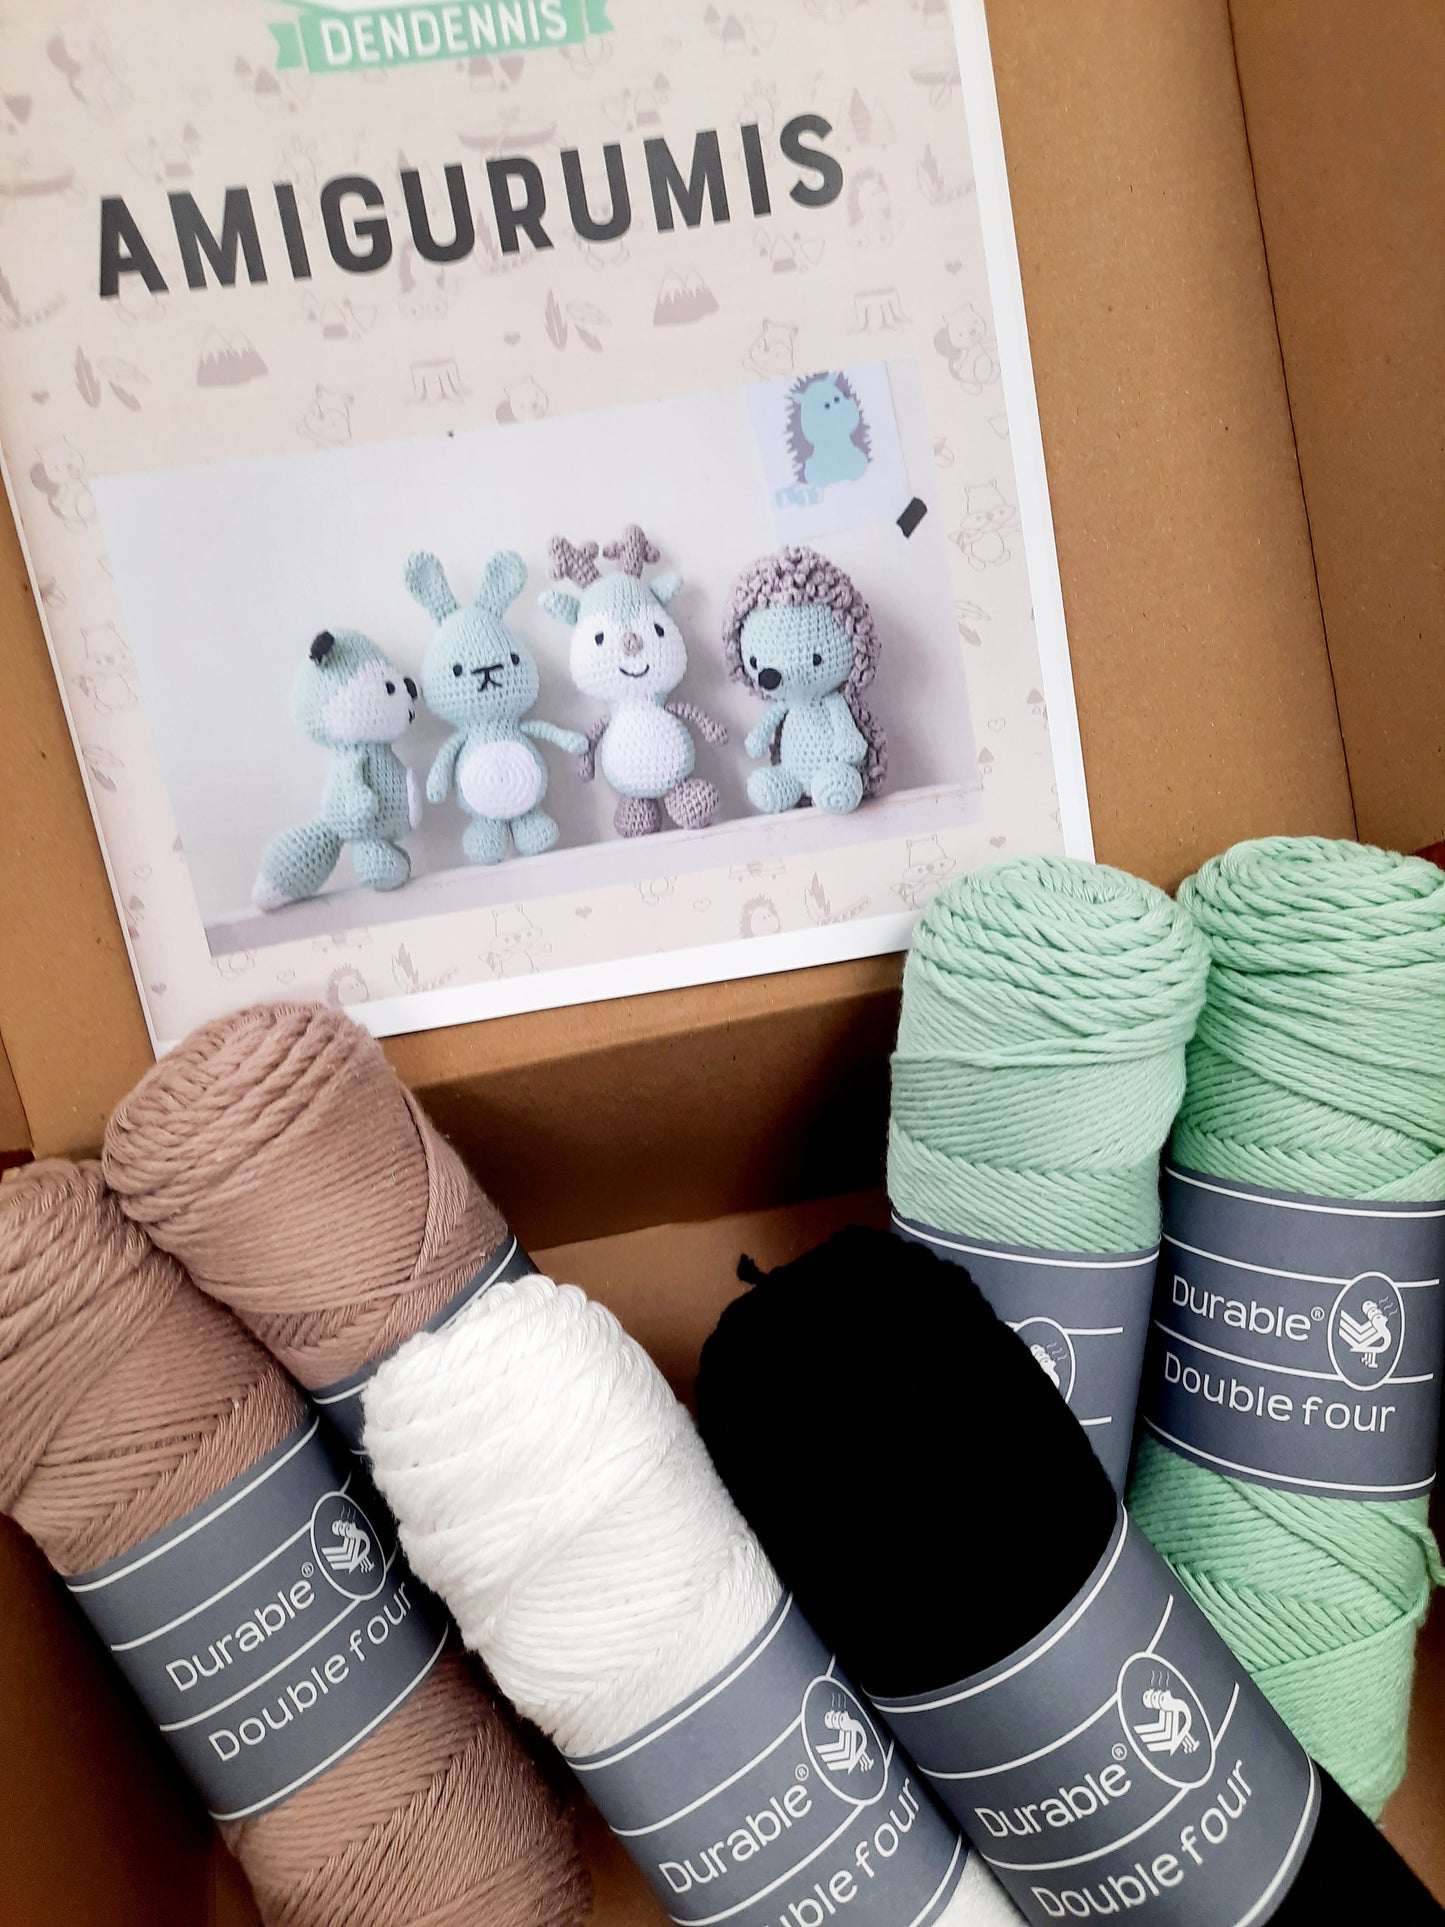 Durable Dendennis Crochet Amigurumi Woodland Creatures Kit